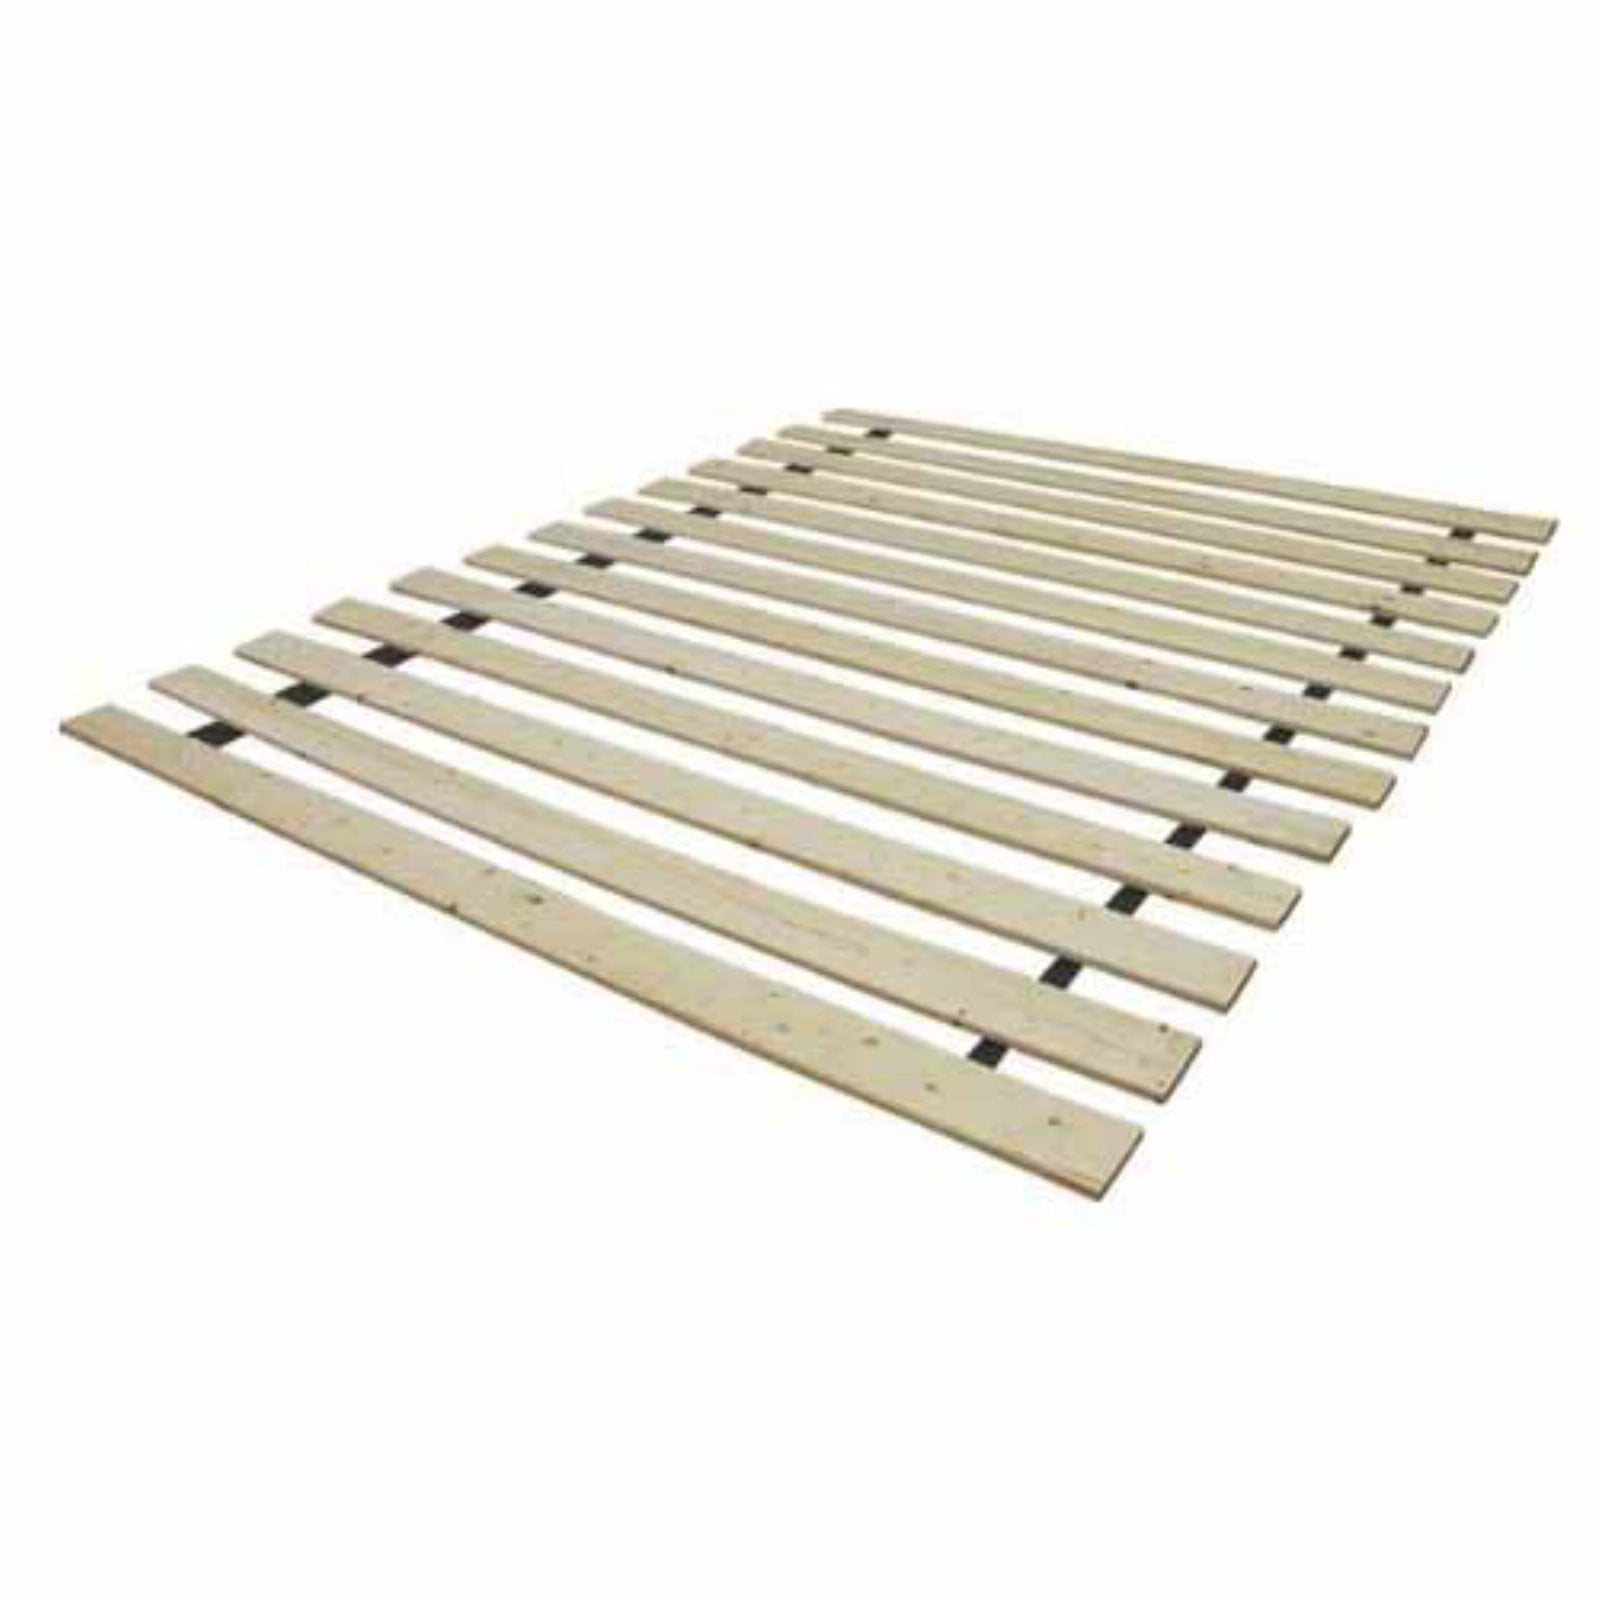 Full Continental Sleep Standard Mattress Support Wooden Bunkie Board/Slats Beige Renewed